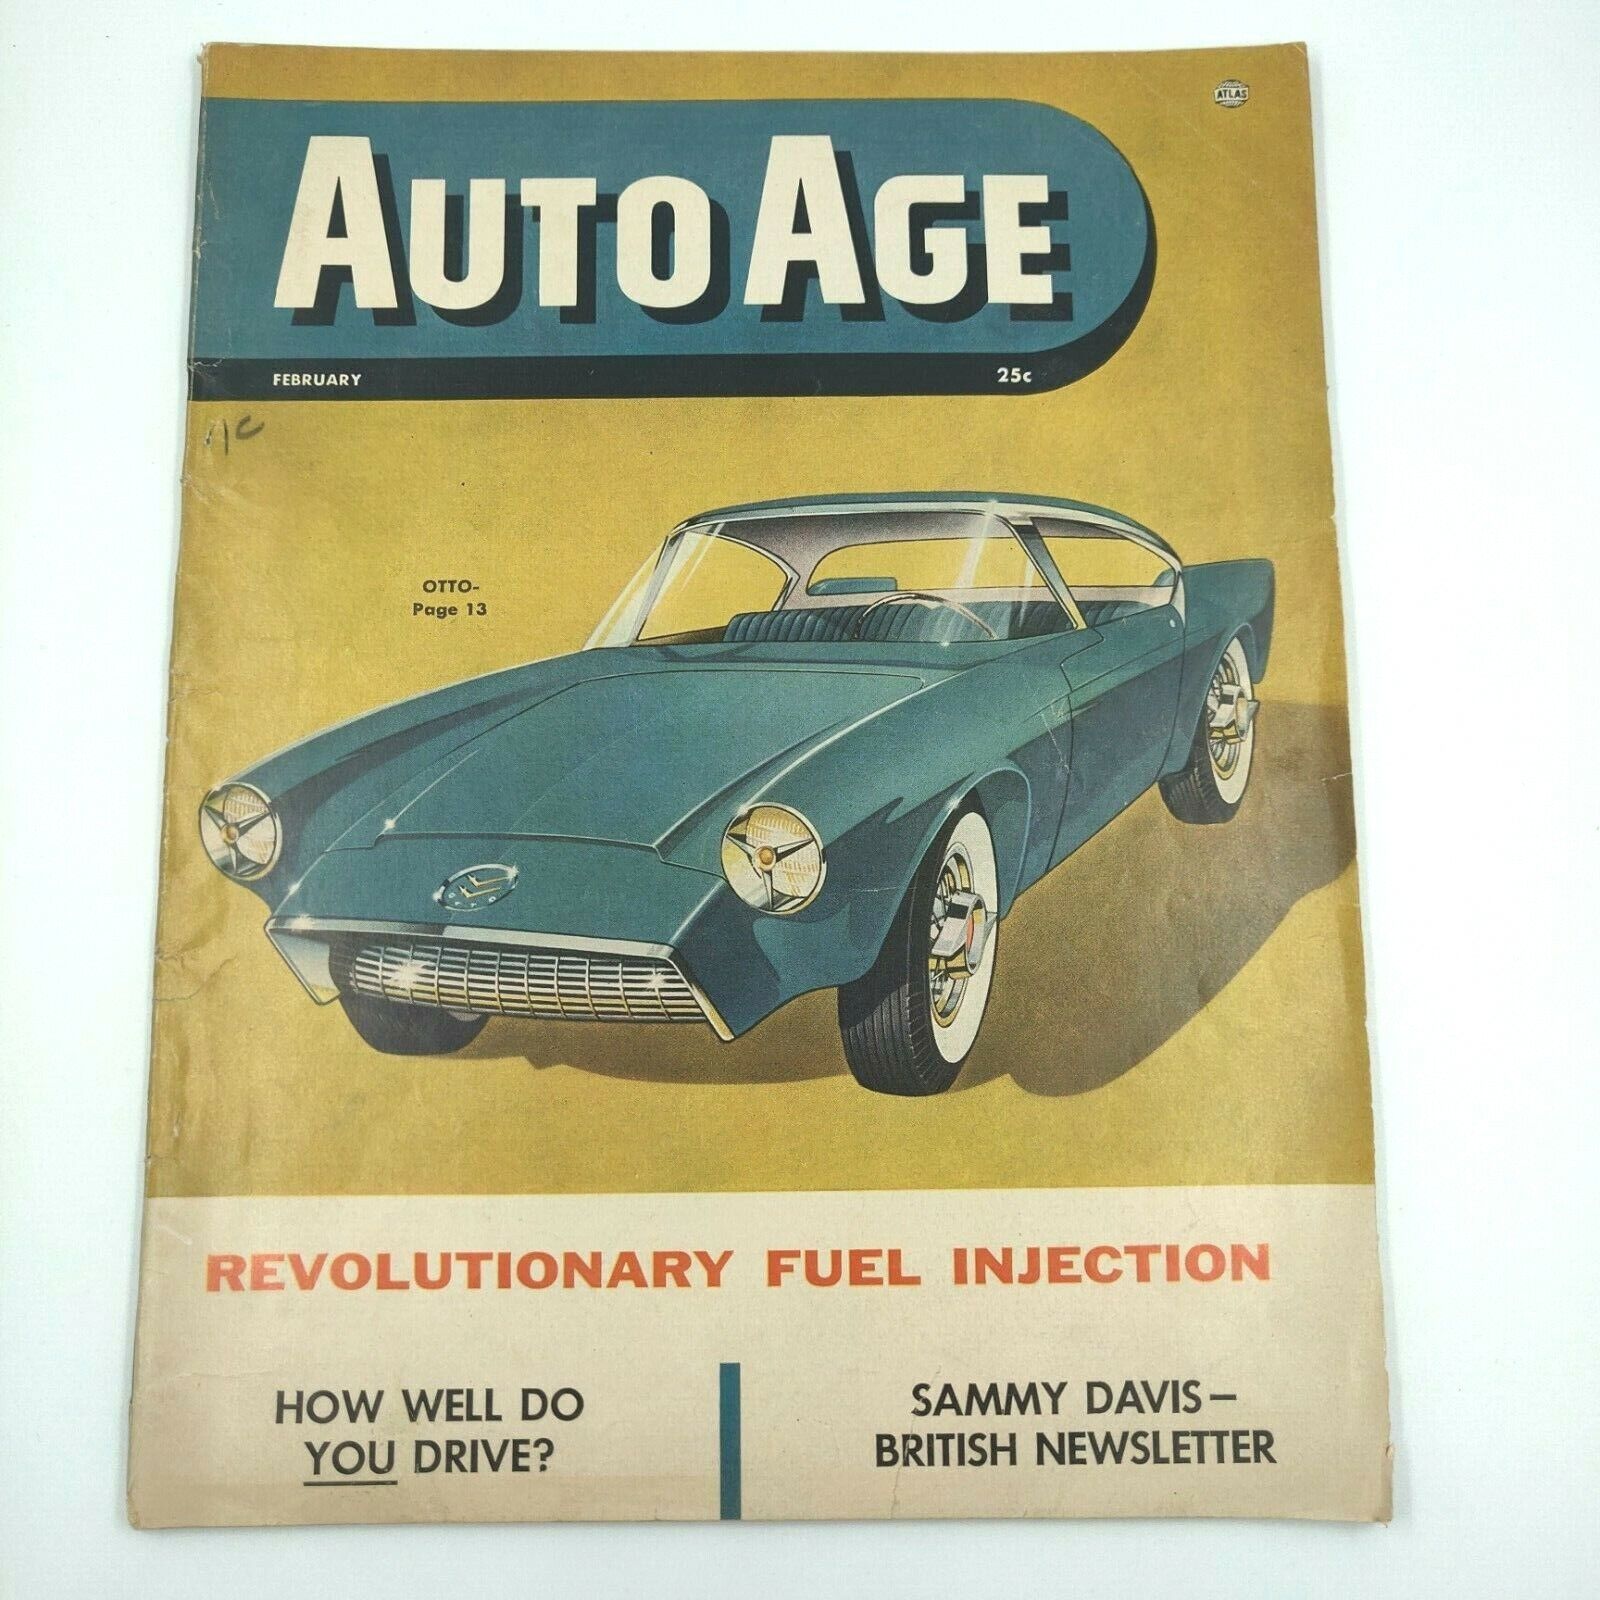 Vintage Auto Age Magazine February 1954 Fuel Injection Sammy Davis